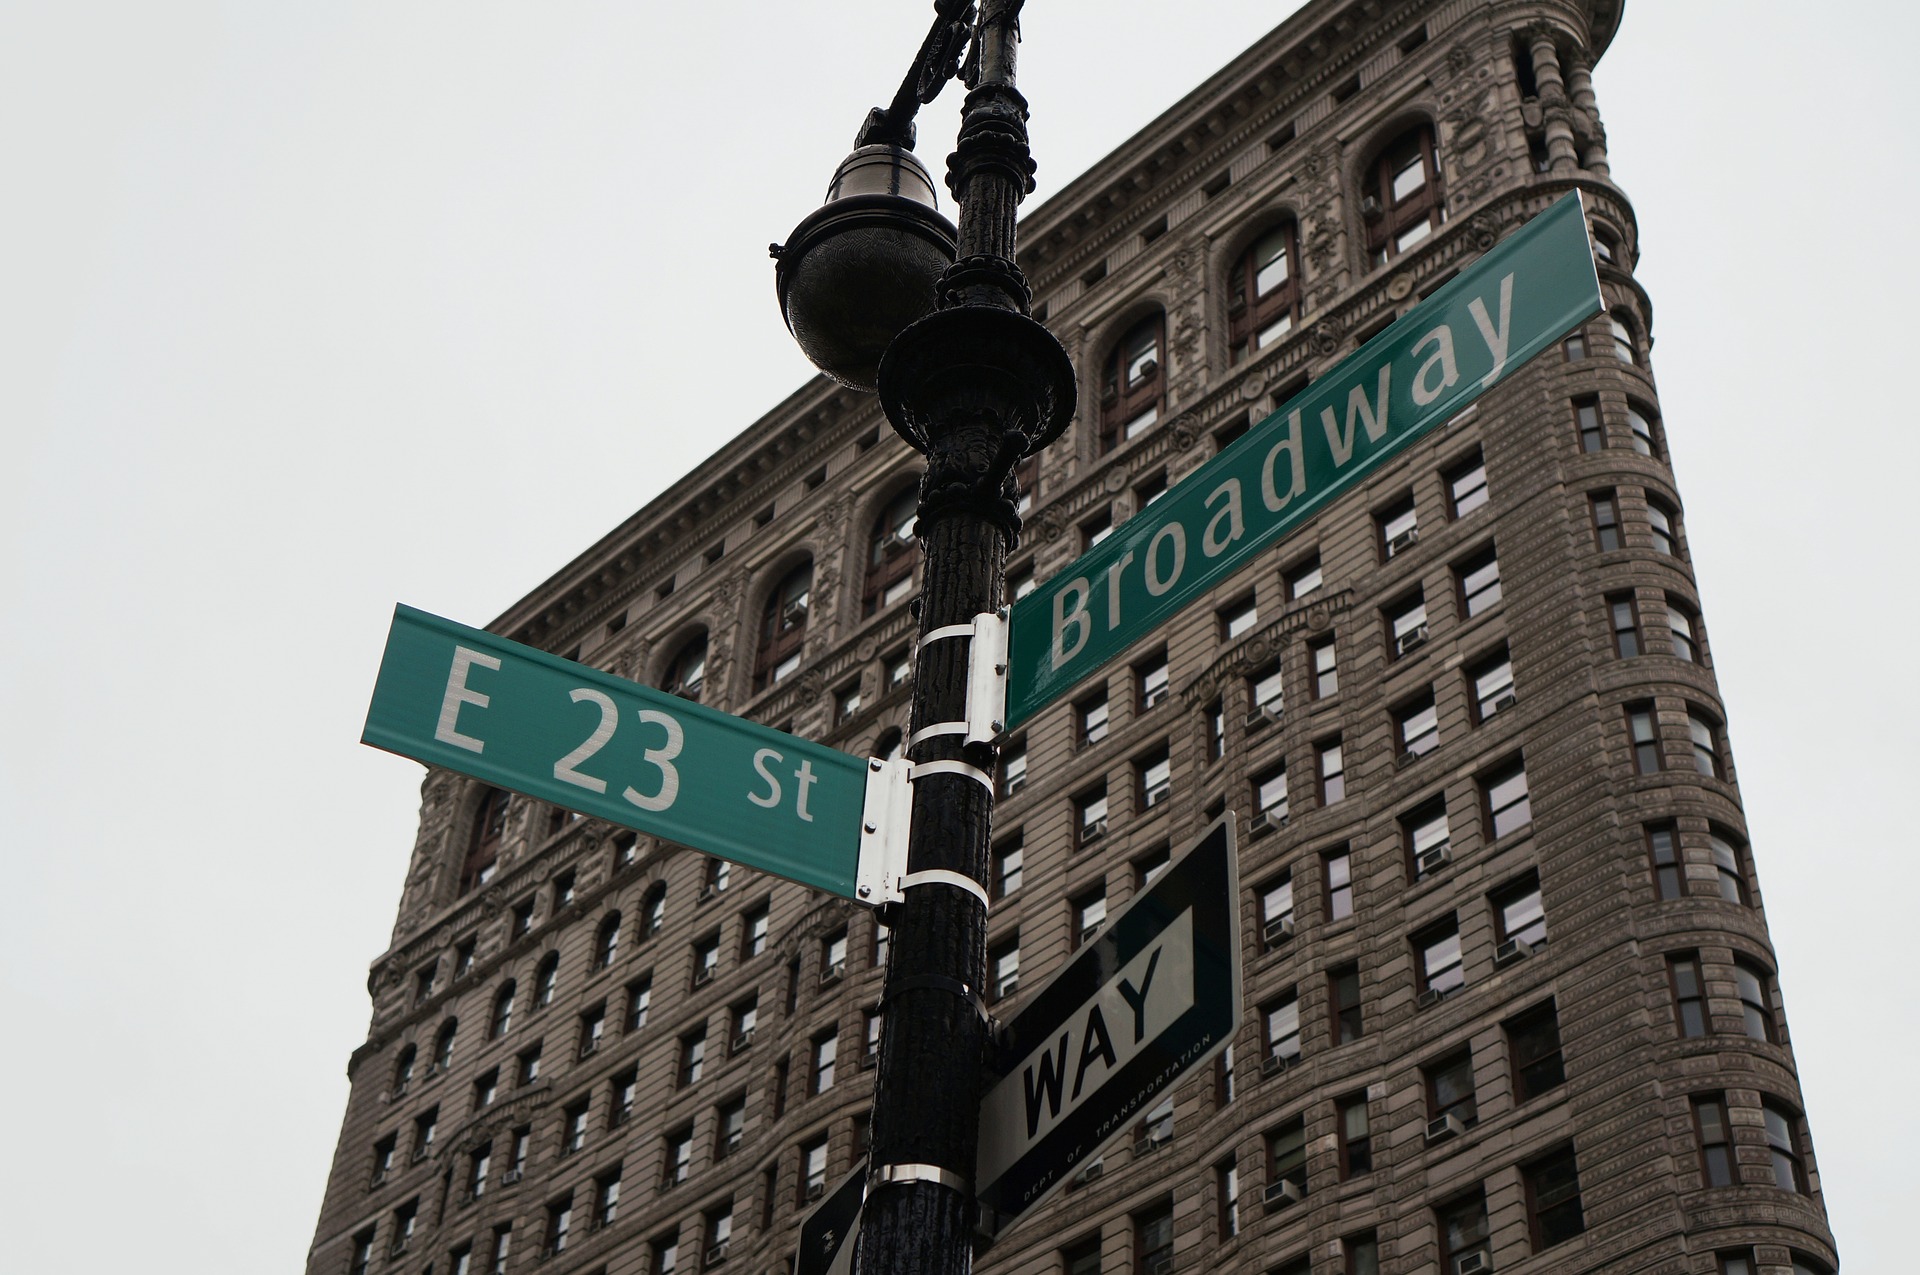 Broadway, New York City, USA